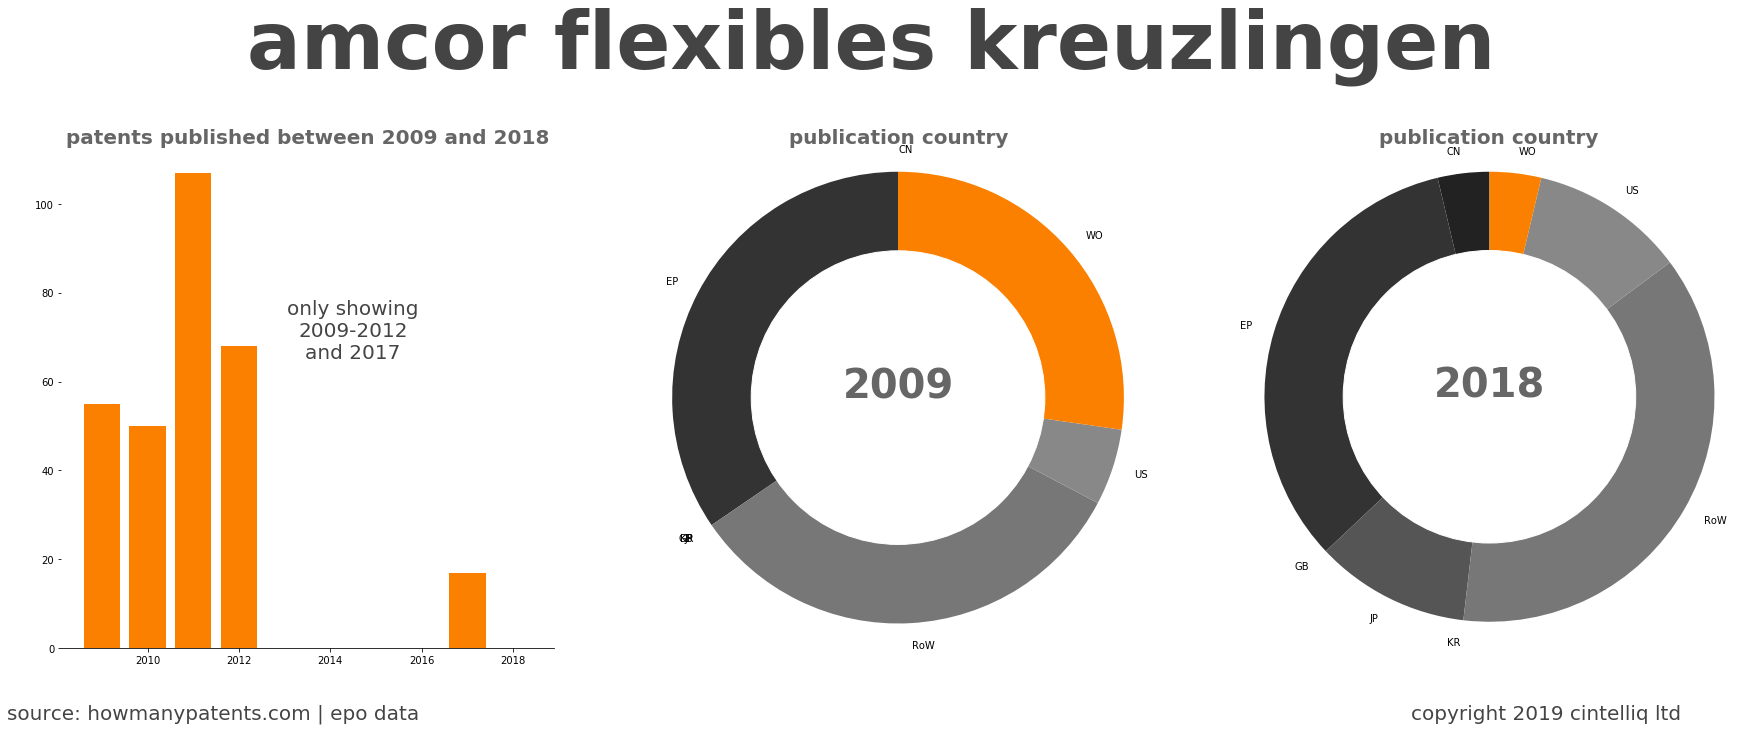 summary of patents for Amcor Flexibles Kreuzlingen